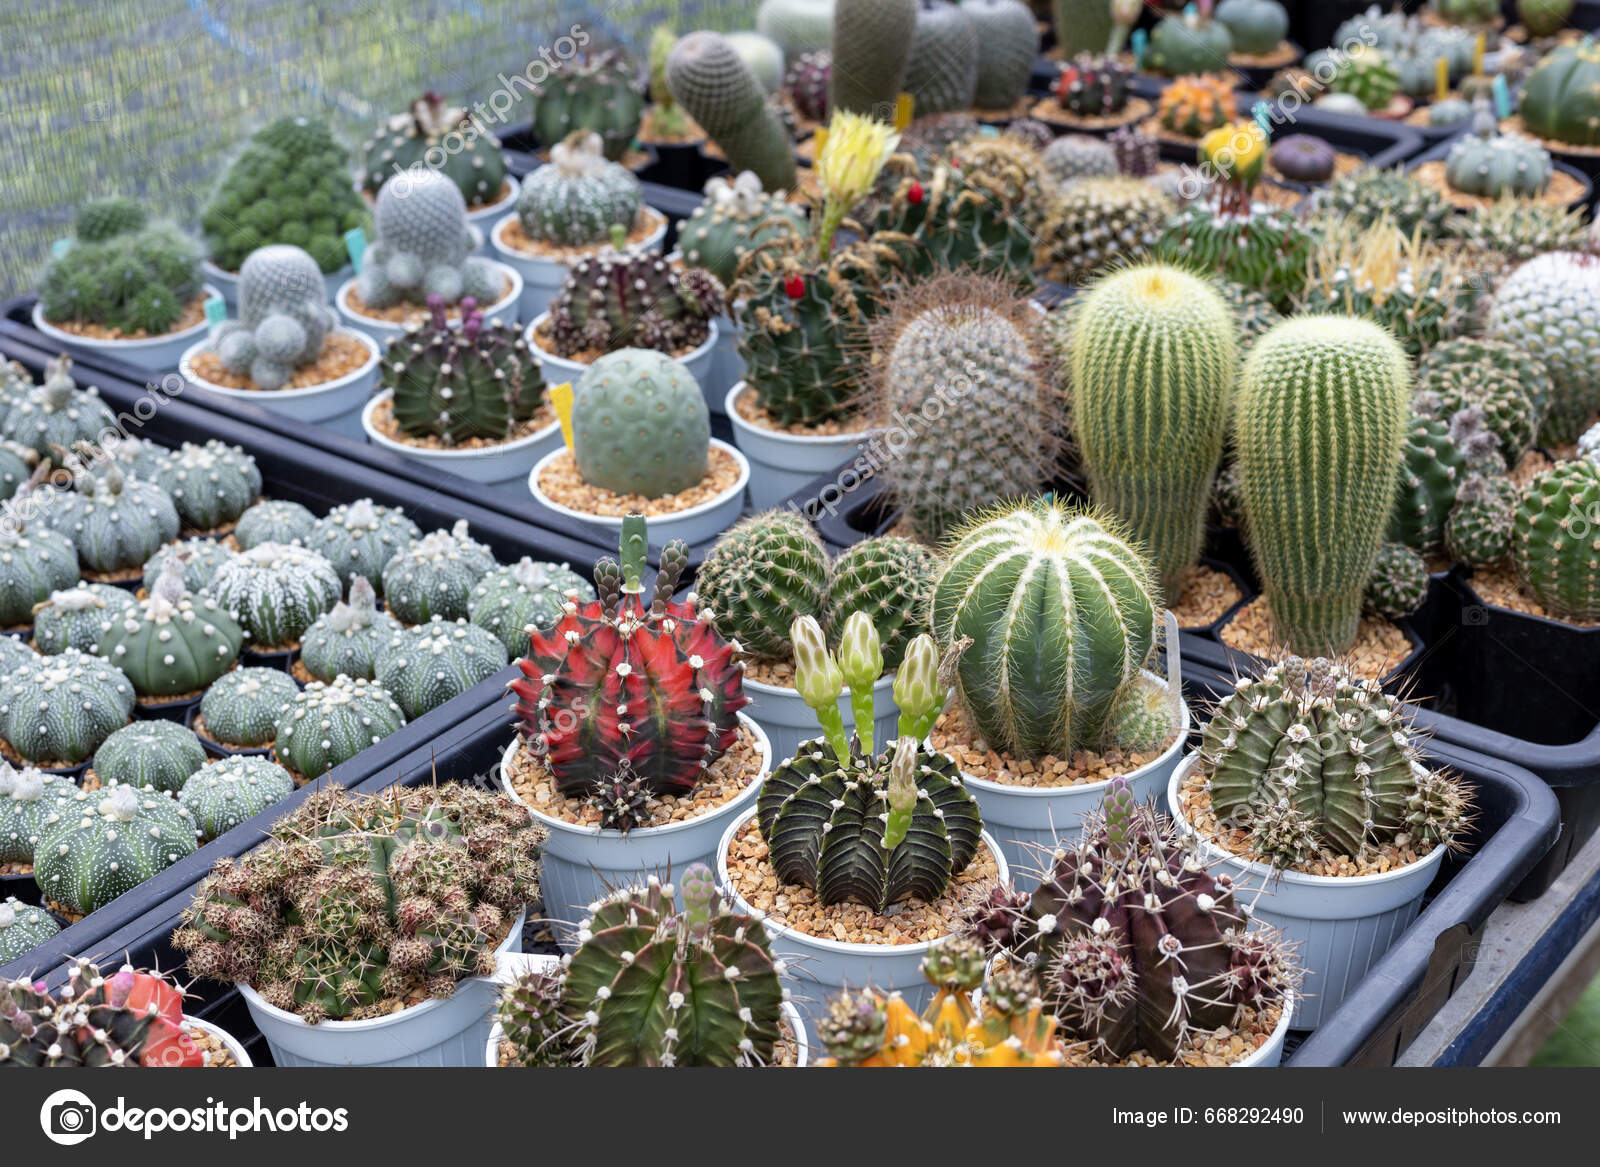 Expositor Estante Cactus Suculentas Invernadero Para Jardín Plantas Secas  Amorosas: fotografía de stock © akarawut #668292490 | Depositphotos